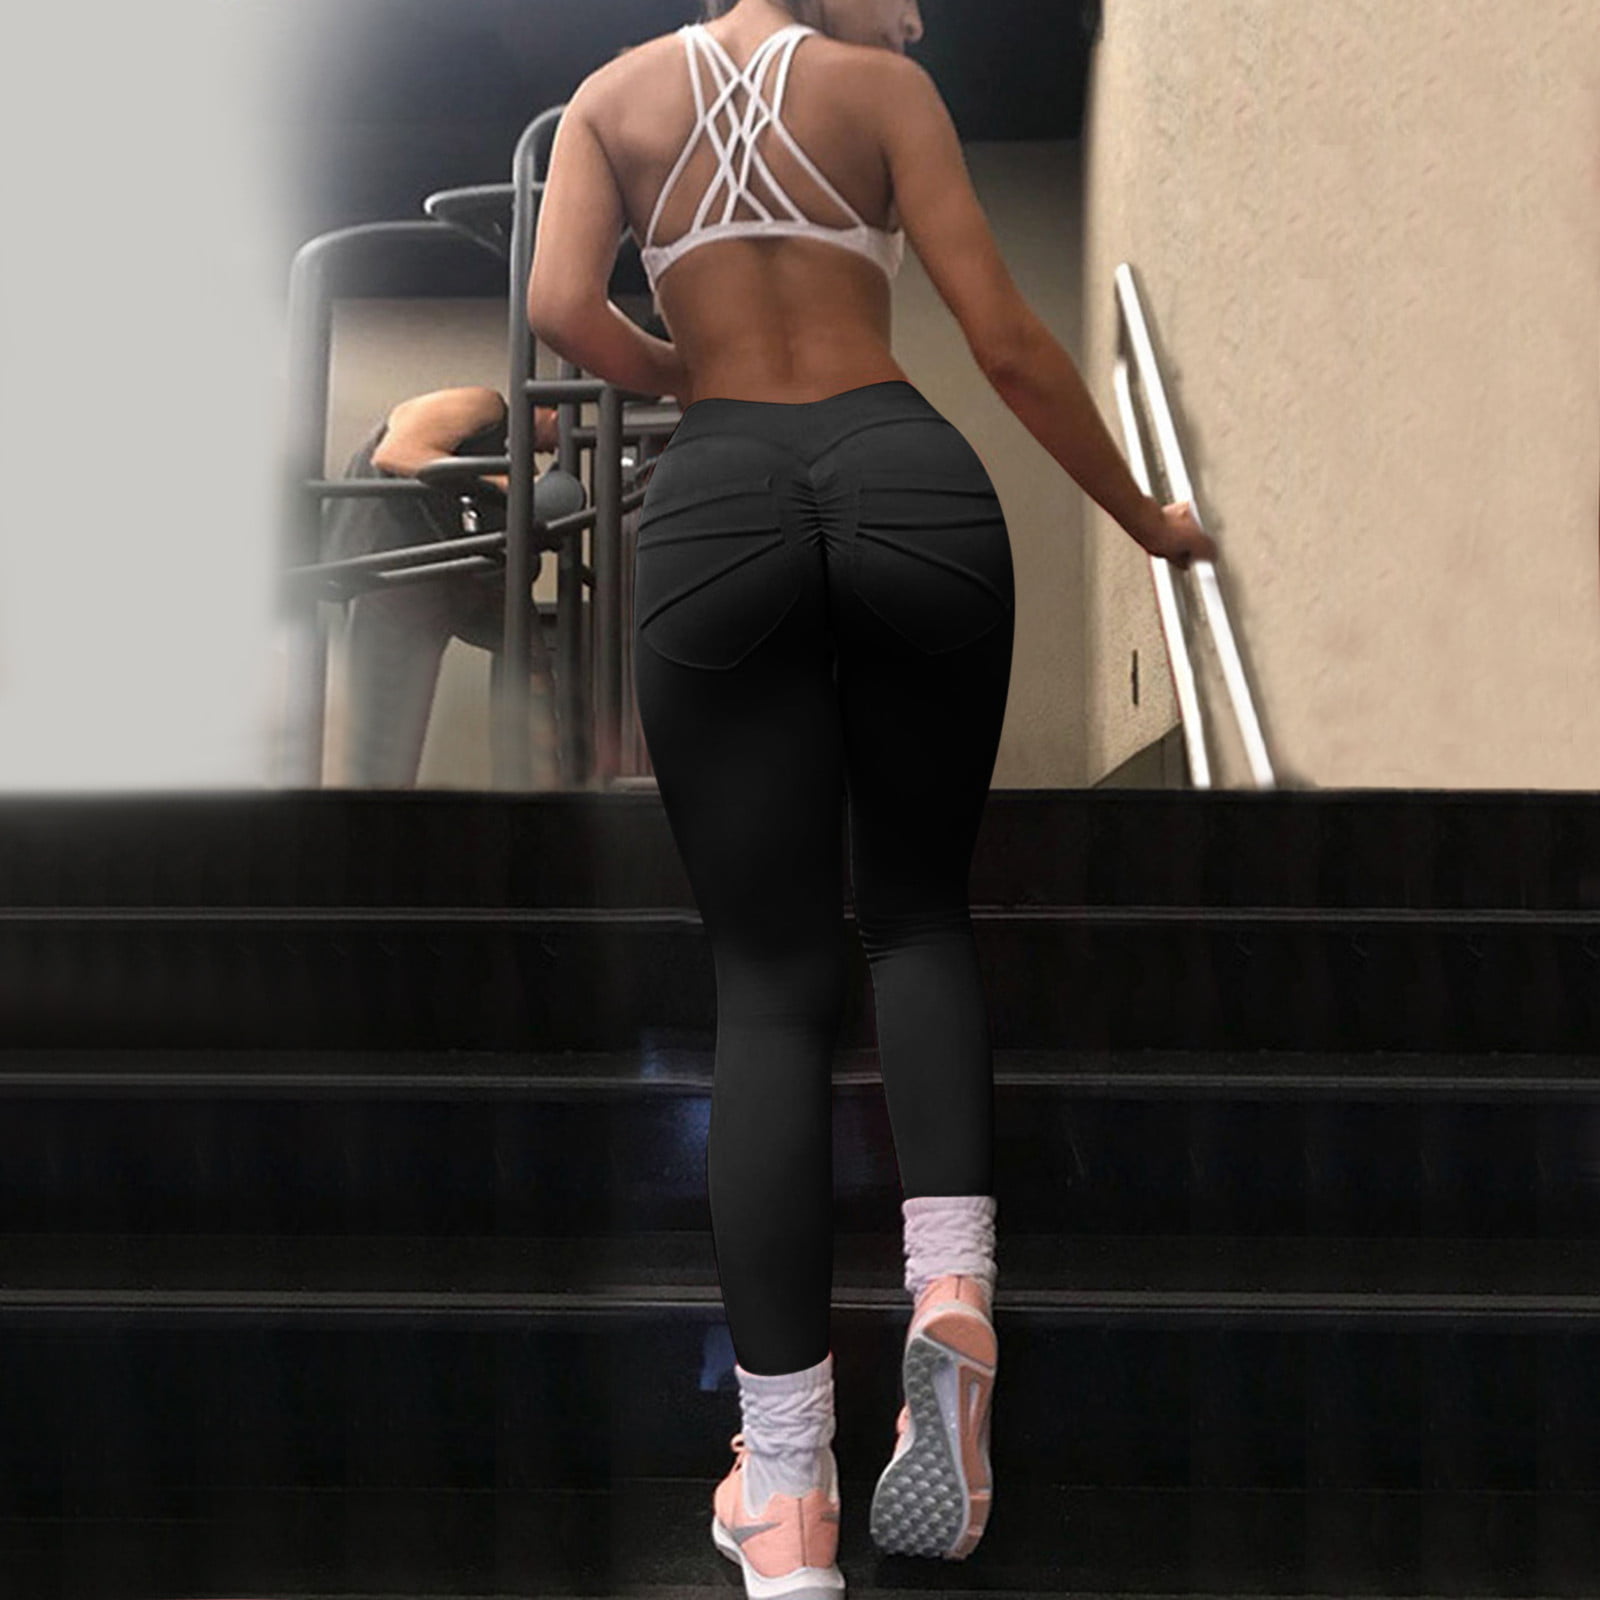 Bescita Women'S Fitness Sports Stretch High Waist Skinny Sexy Yoga Pants  with Pockets 